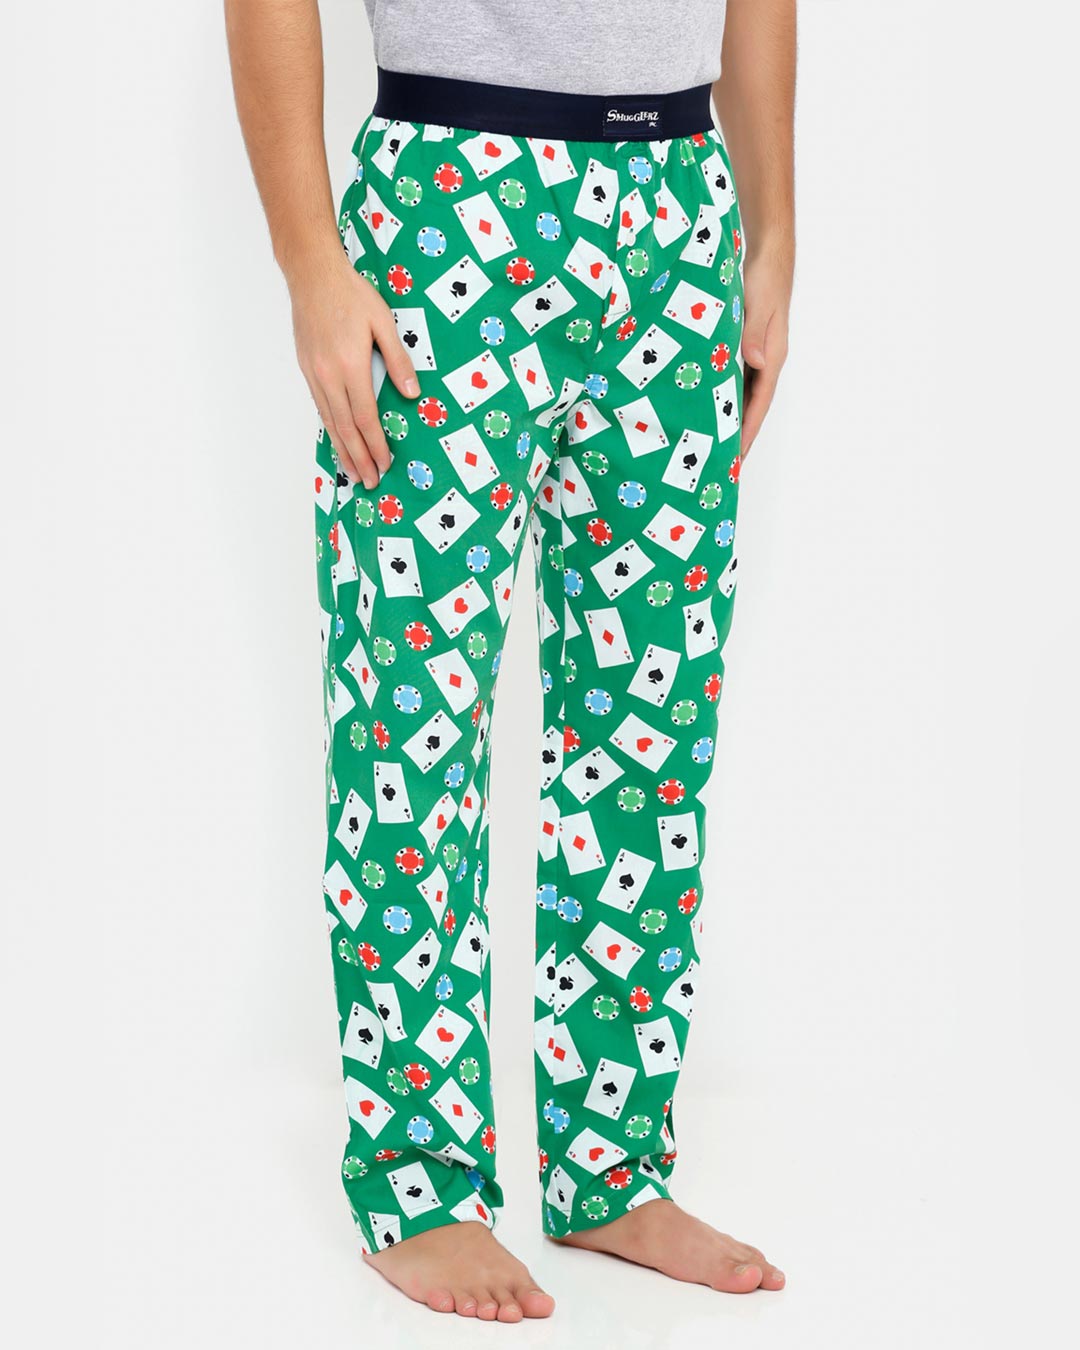 Shop Cards & Casino Chips Pyjamas Green-Back